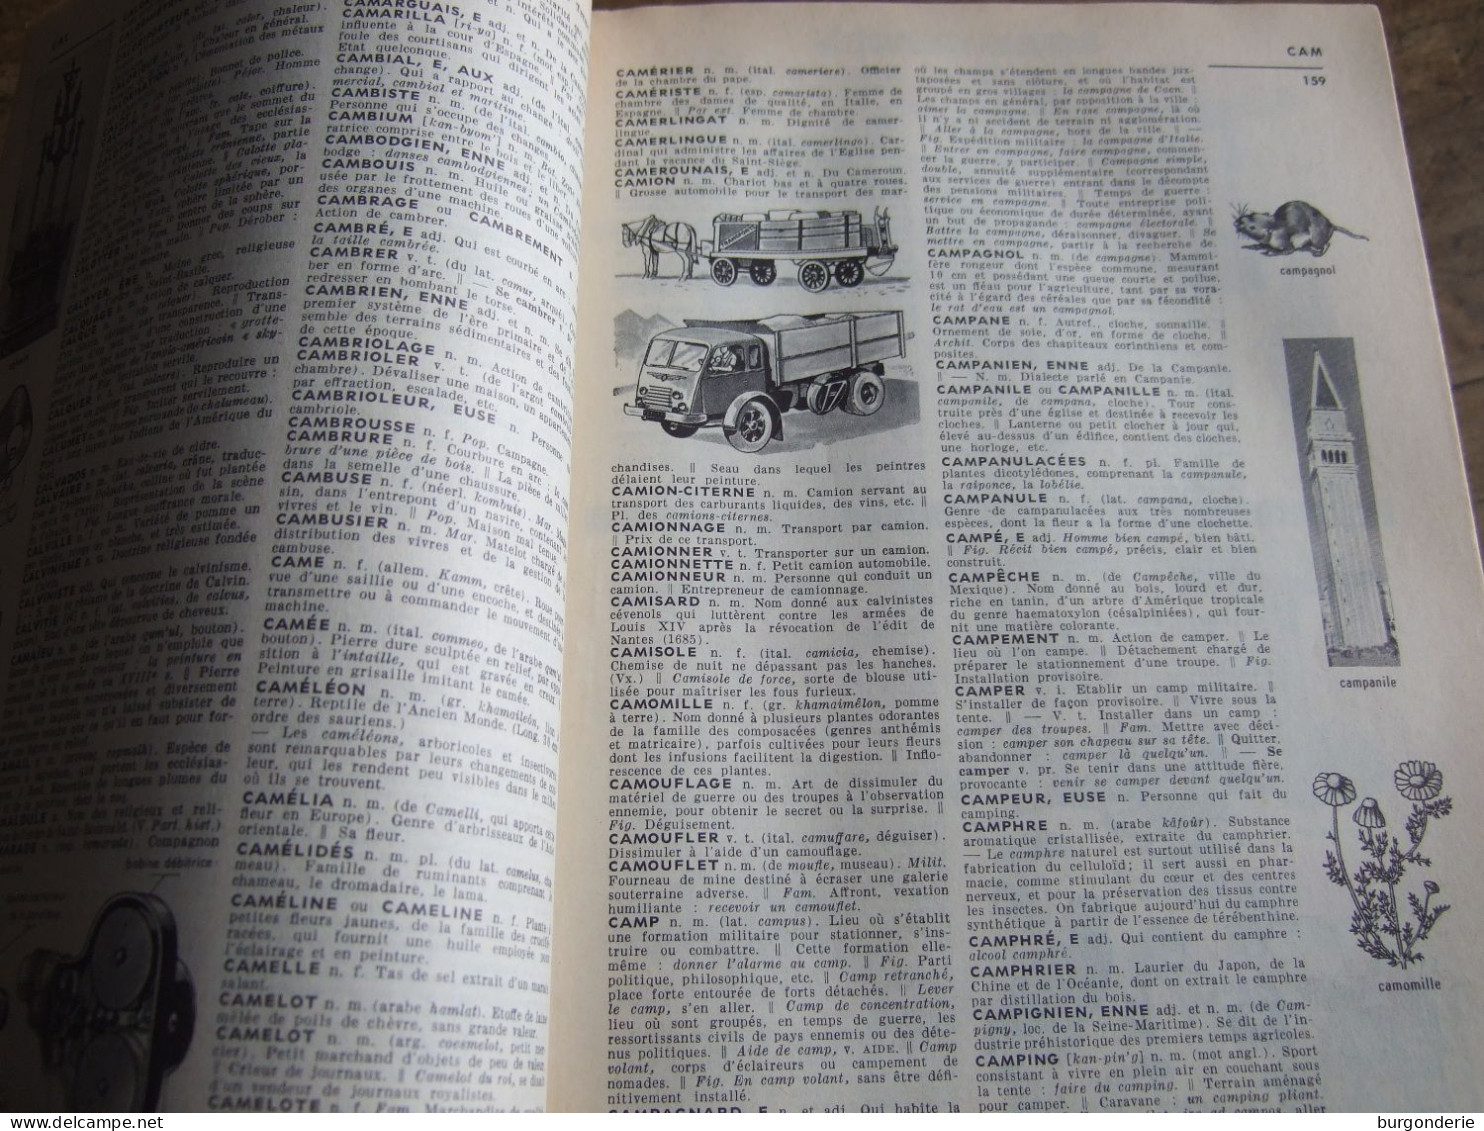 PETIT LAROUSSE / 1959 / EDITION SPECIALE - Wörterbücher